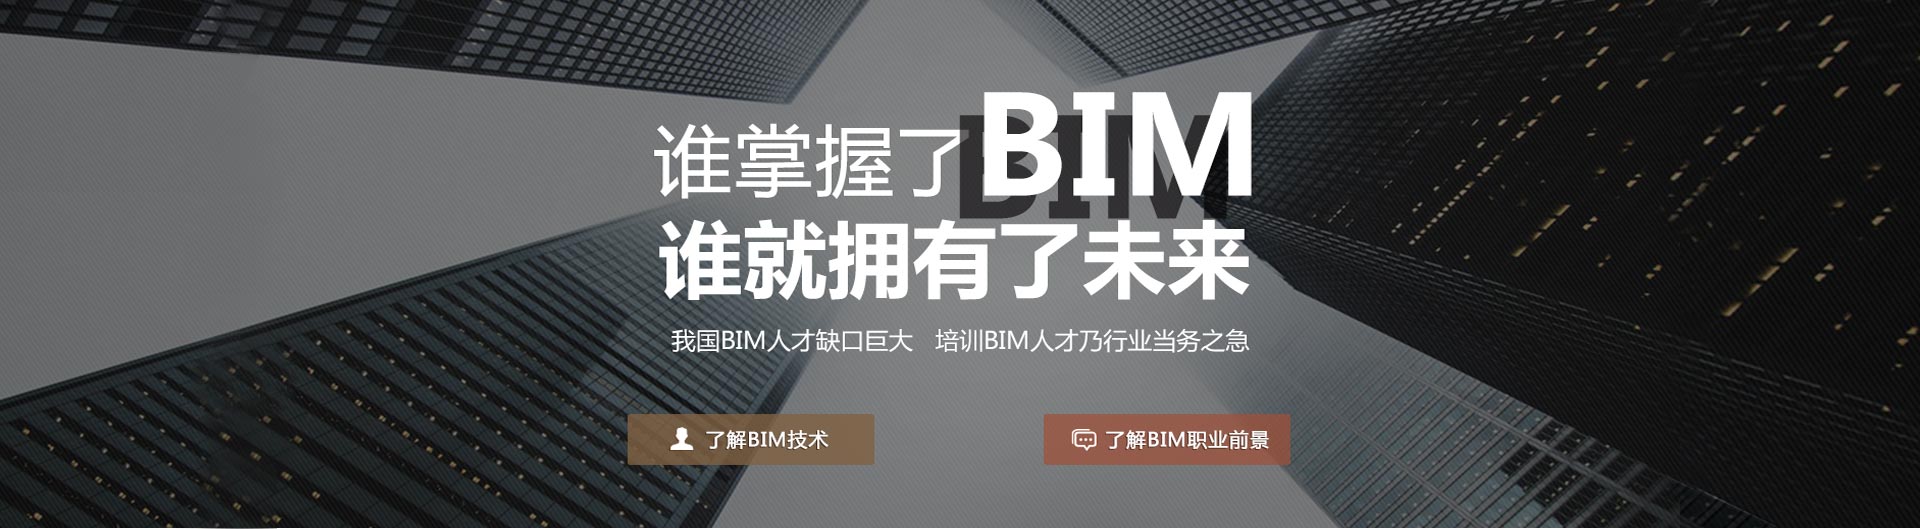 bim-banner01